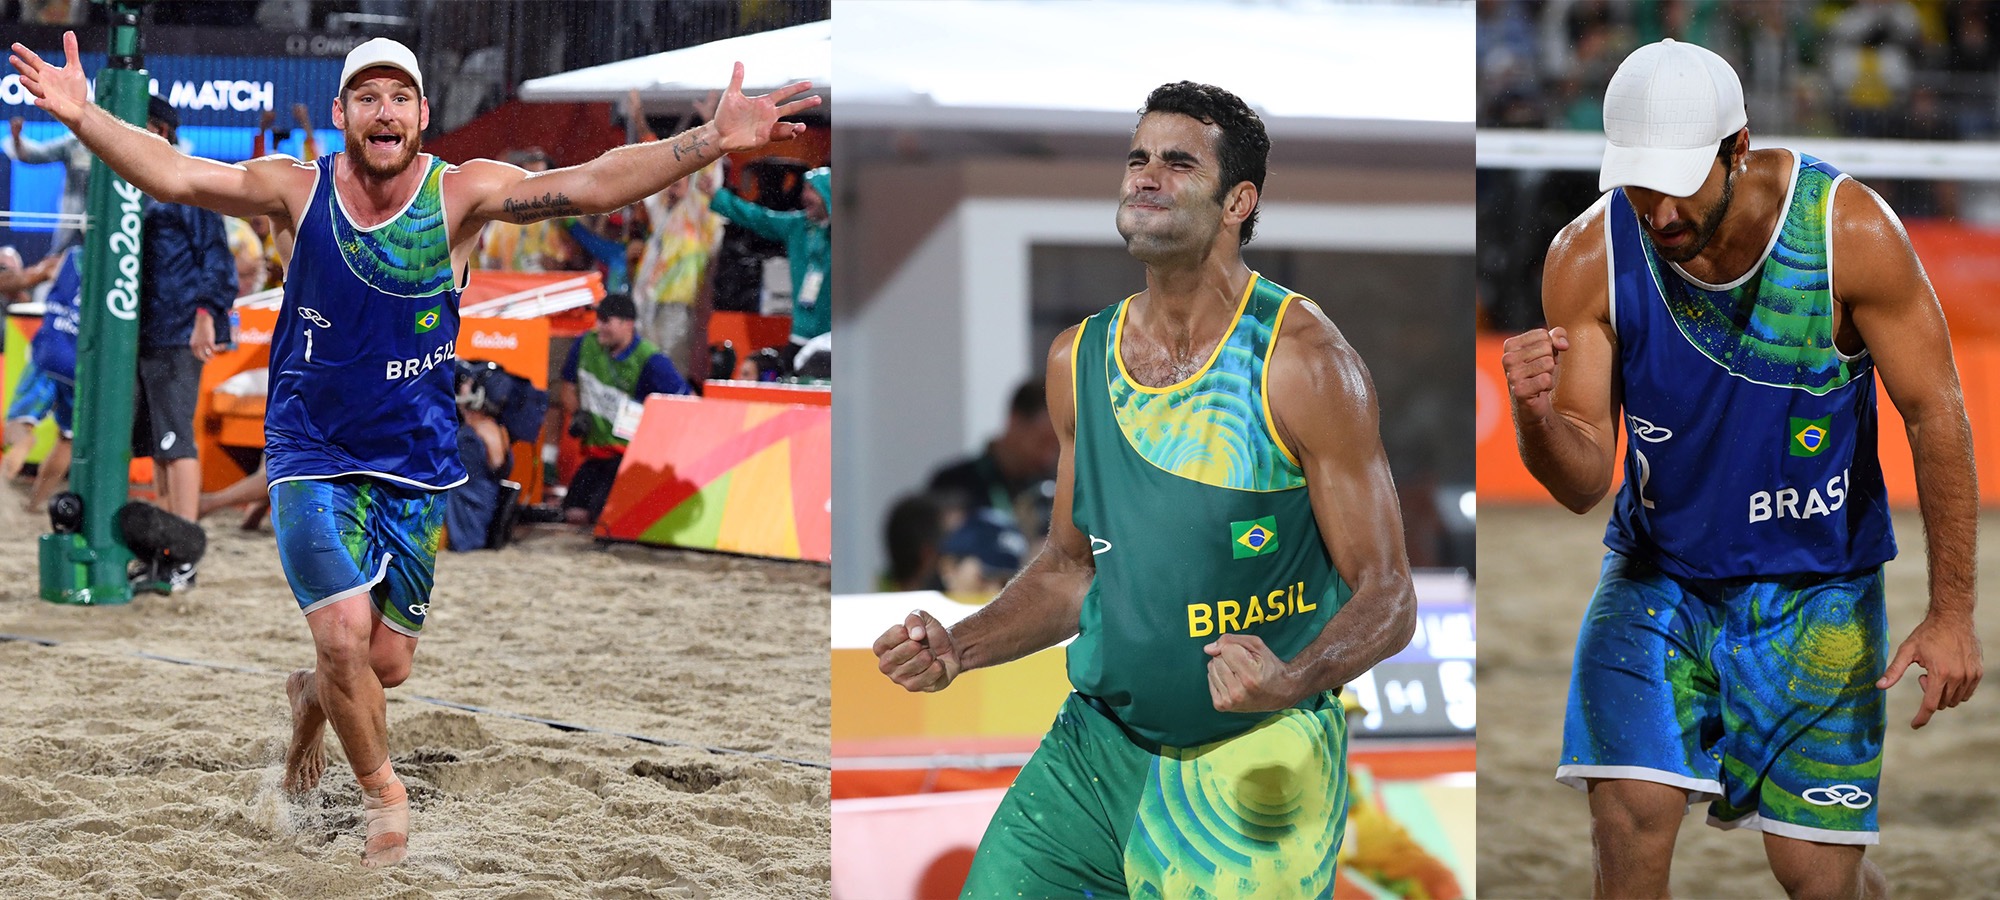 Team Brazil Men's Beach Volleyball 2016 Olympics